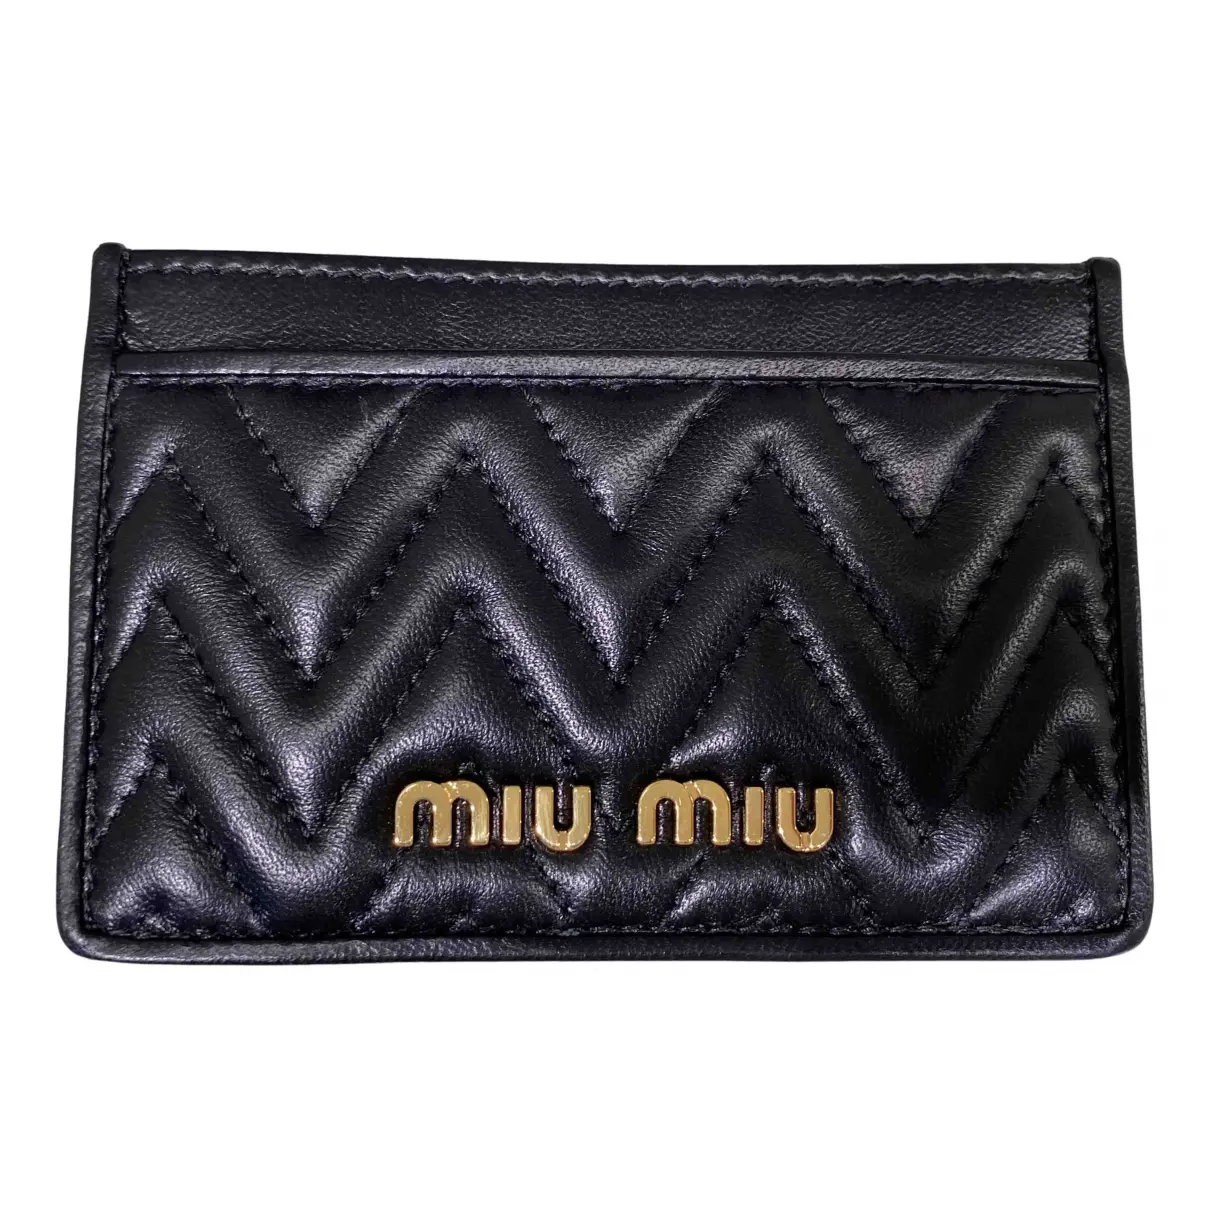 Leather card wallet Miu Miu